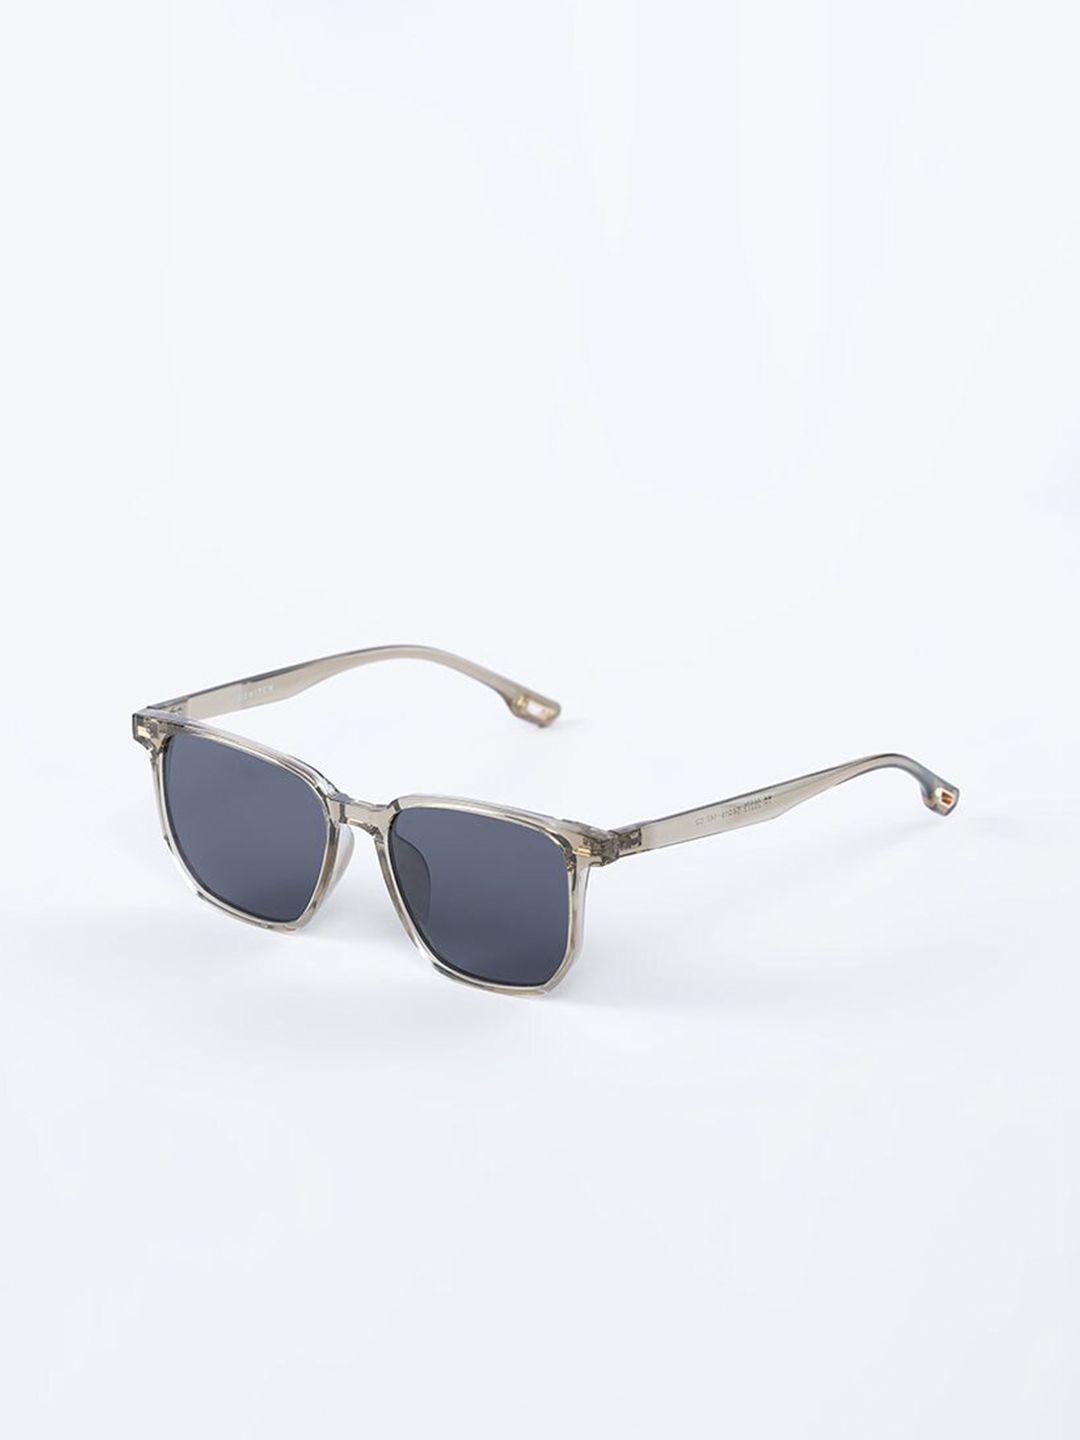 snitch men black square sunglasses with uv protected lens sunglasses